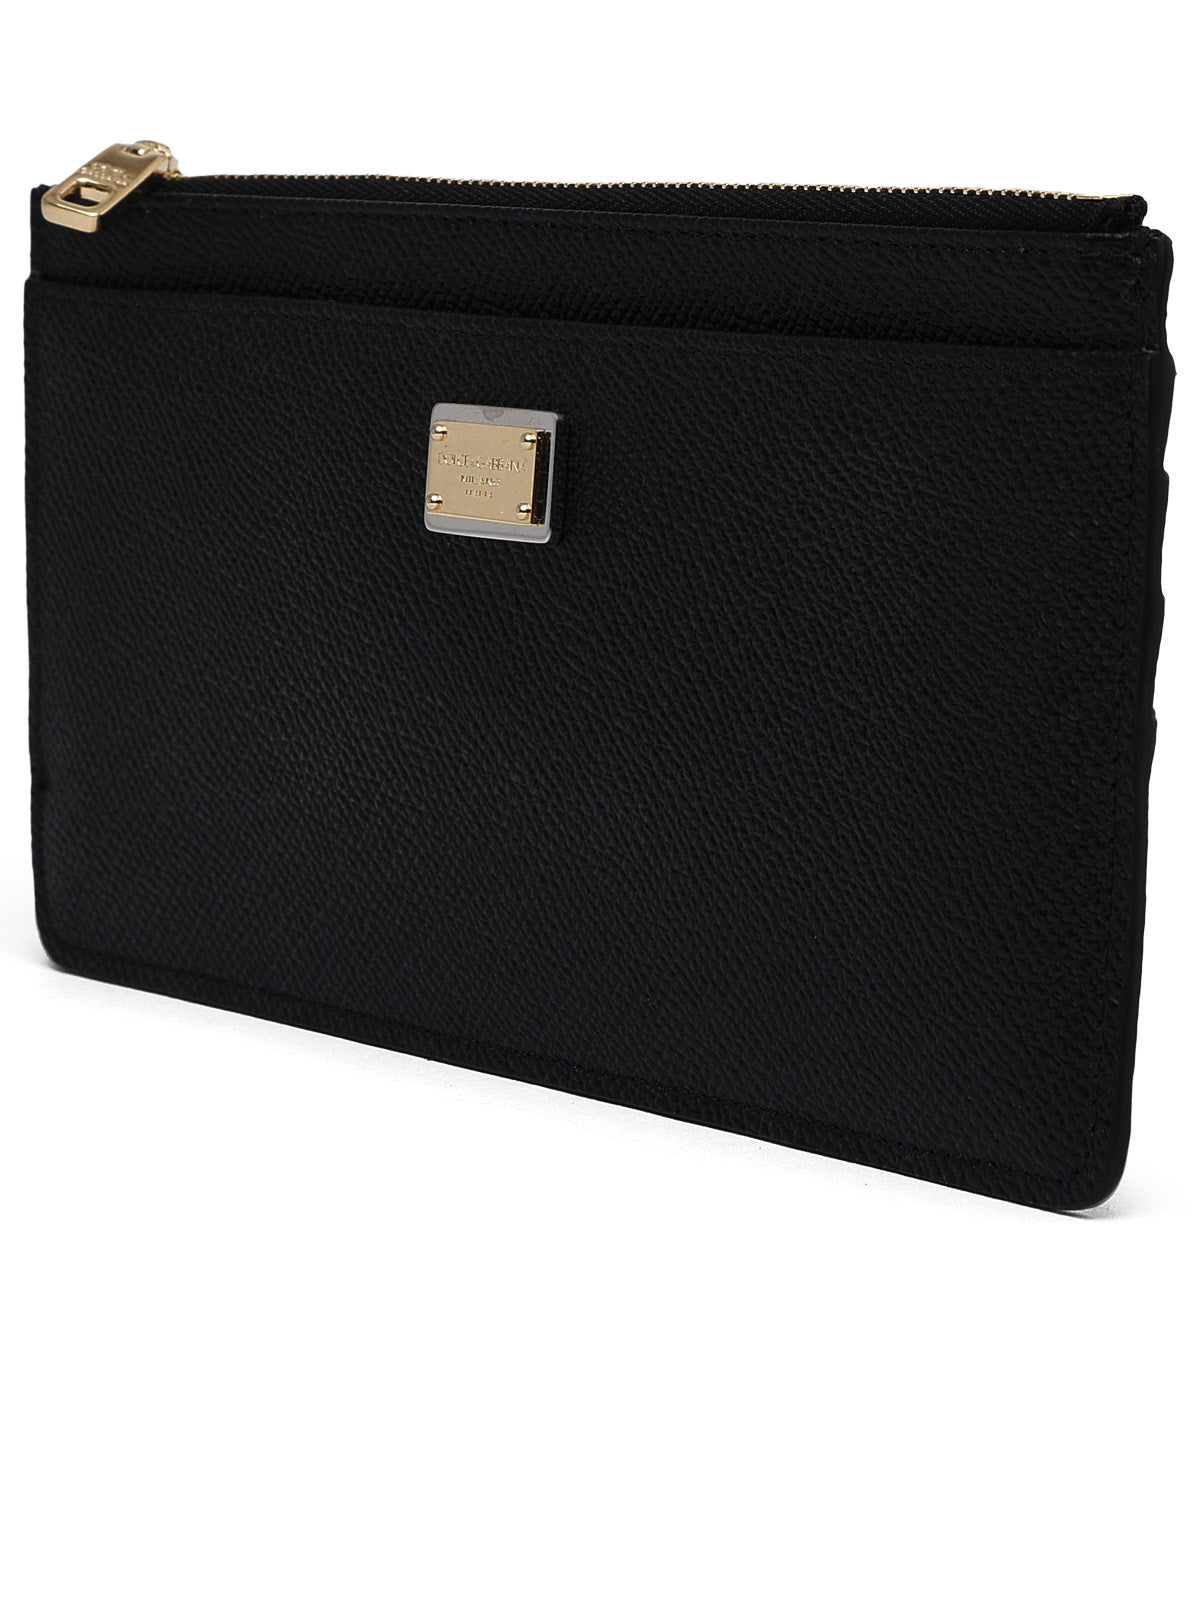 Dolce & Gabbana Woman Black Leather Card Holder